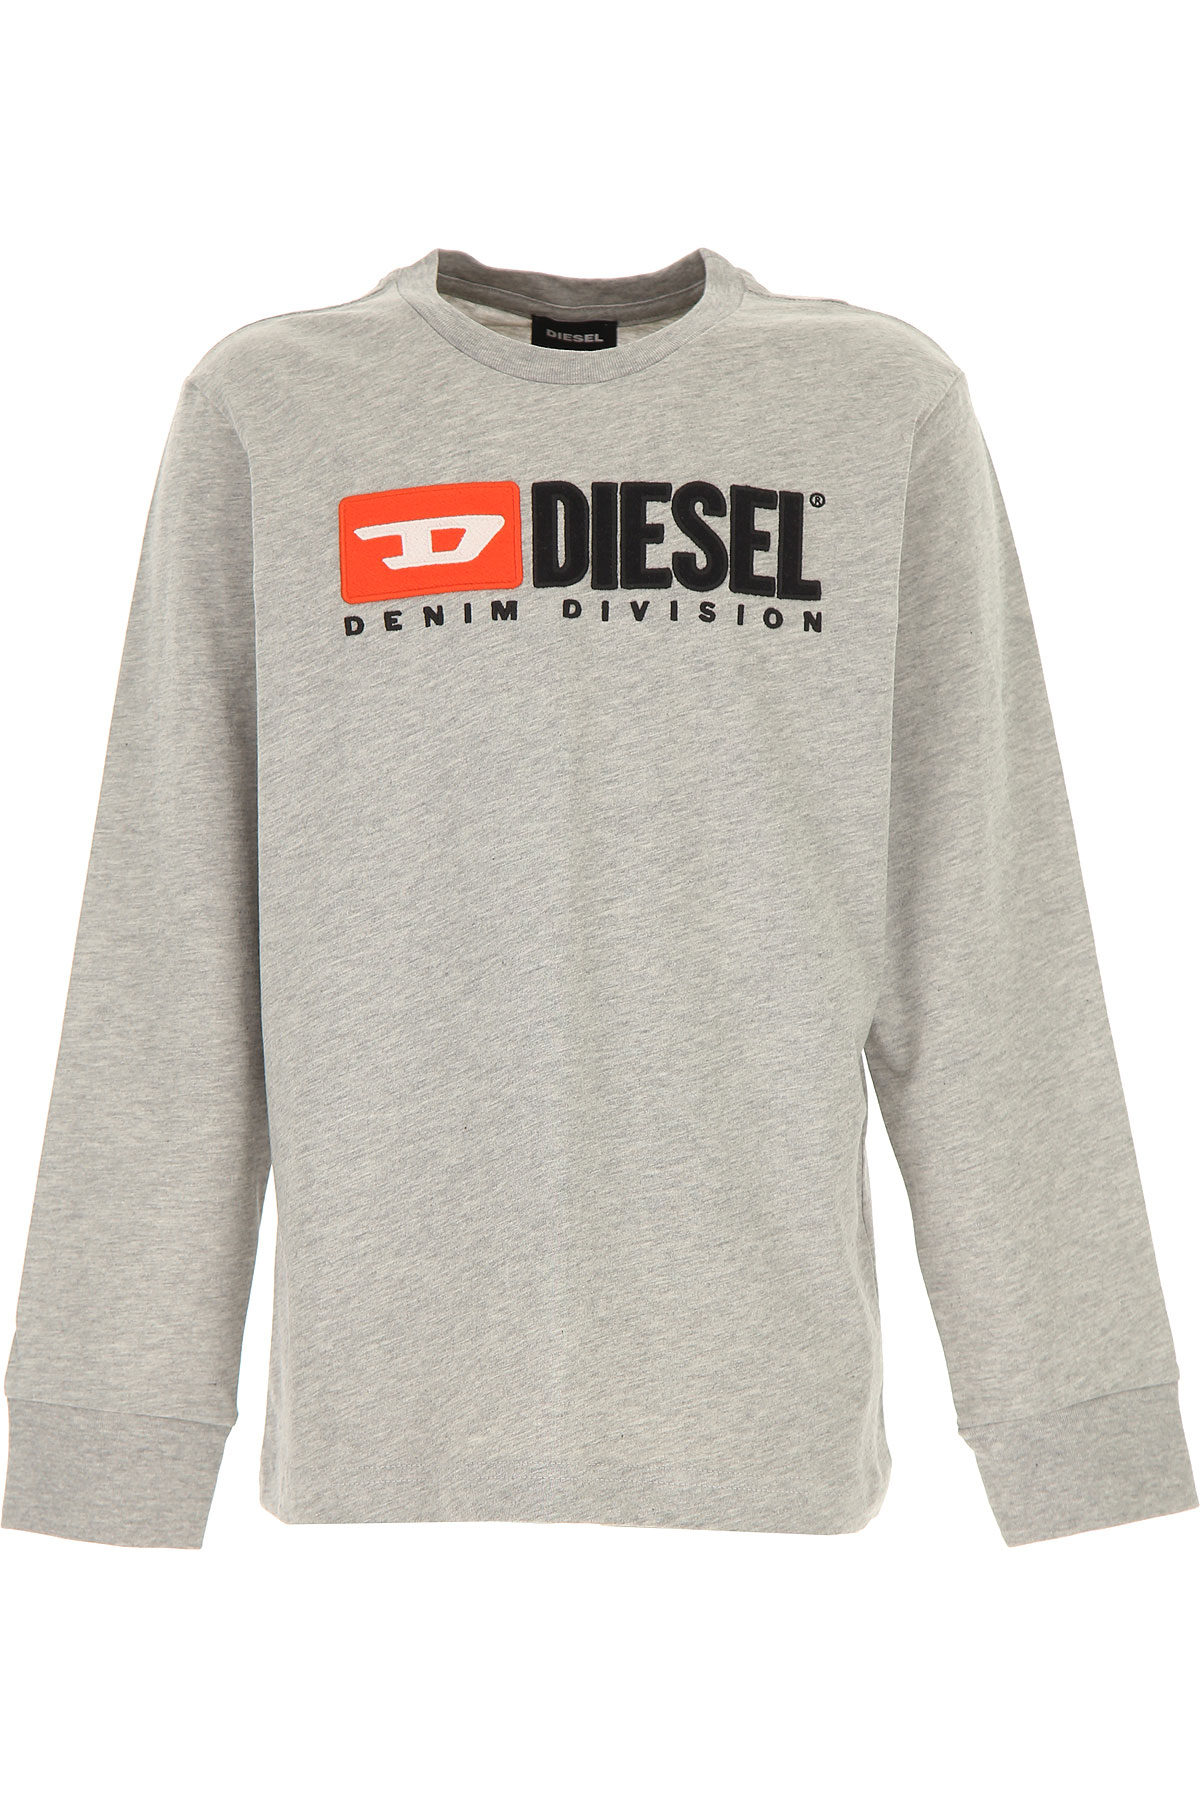 Diesel Kinder T-Shirt für Jungen Günstig im Sale, Grau, Baumwolle, 2017, 10Y 12Y 14Y 16Y 8Y